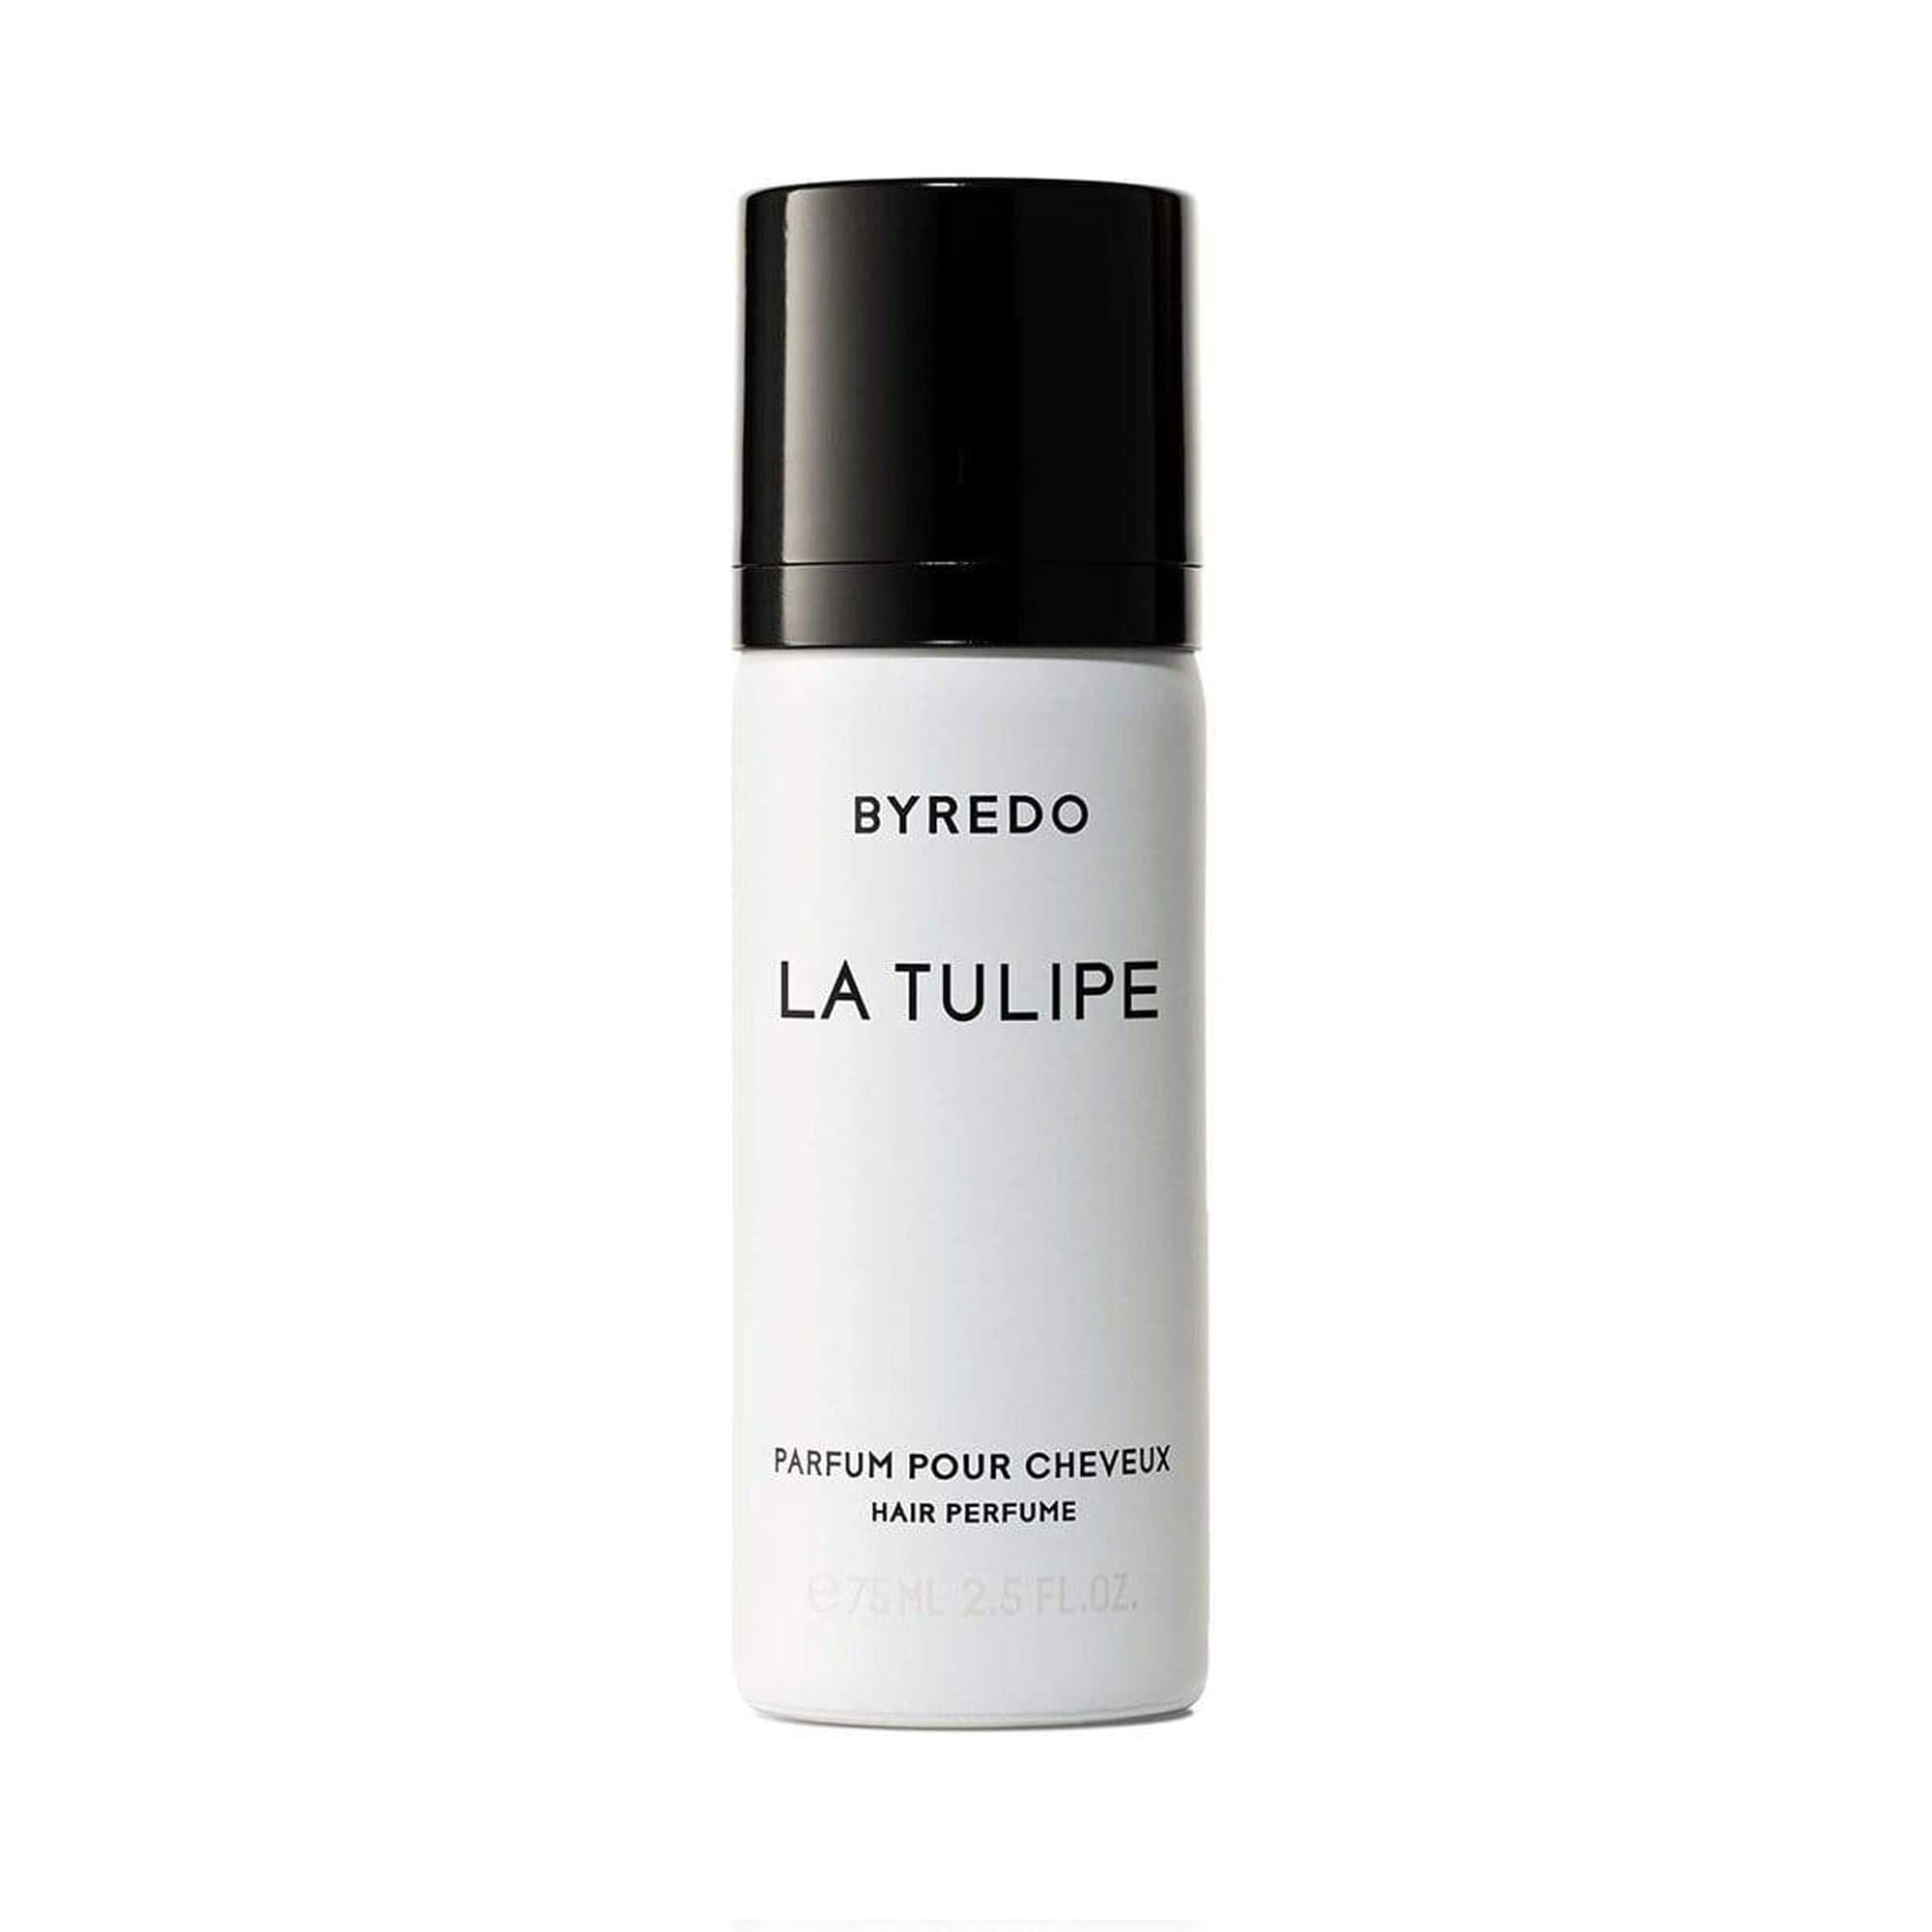 La Tulipe BYREDO Hair Perfume